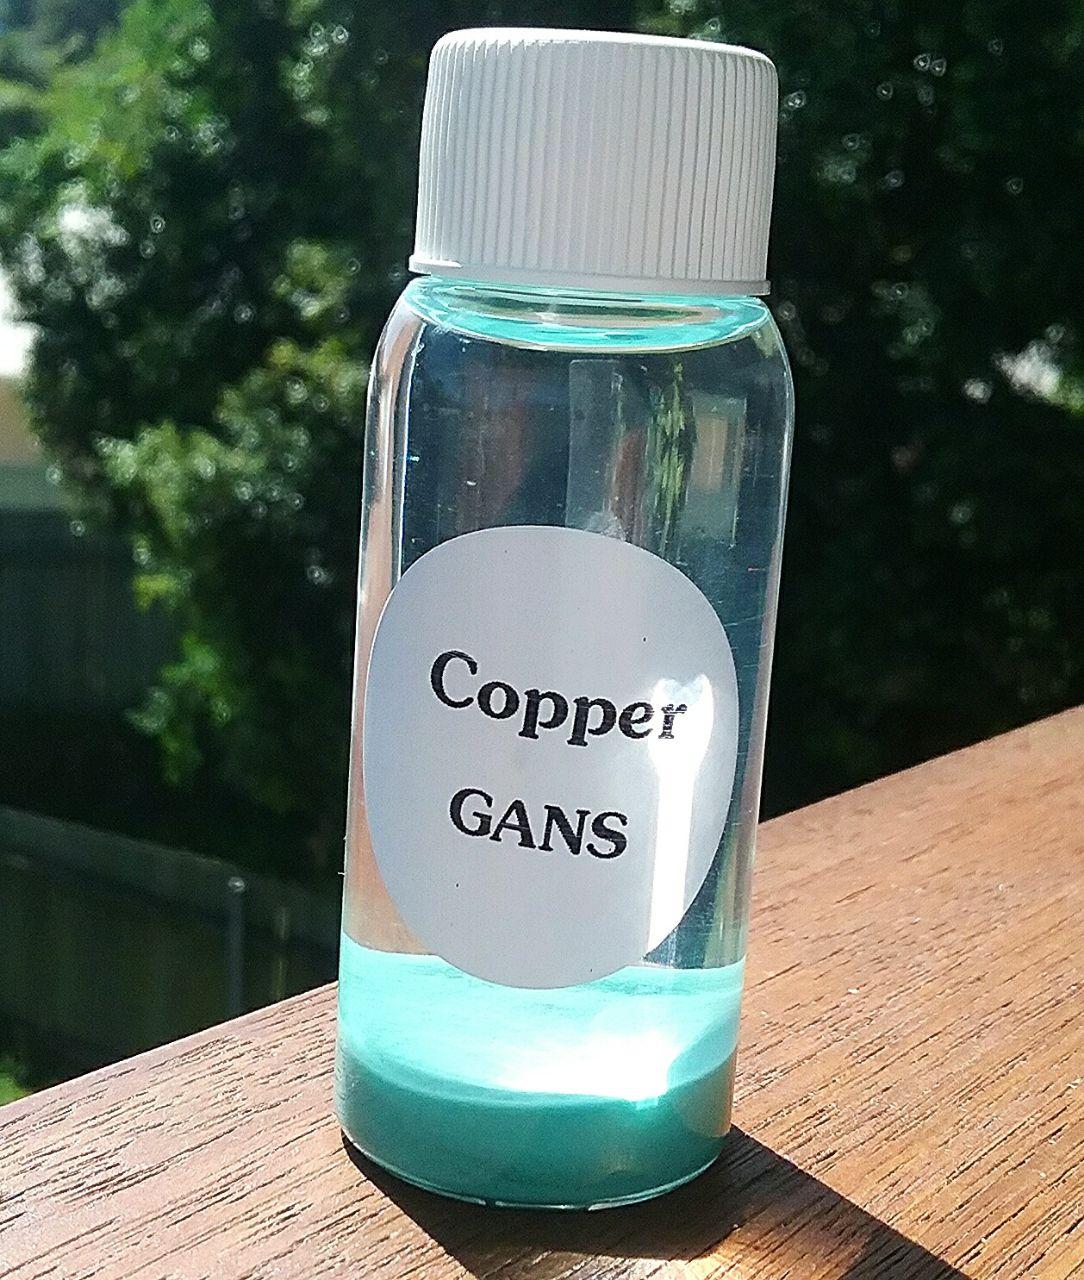 Copper Oxide GaNS approx 20g when settled